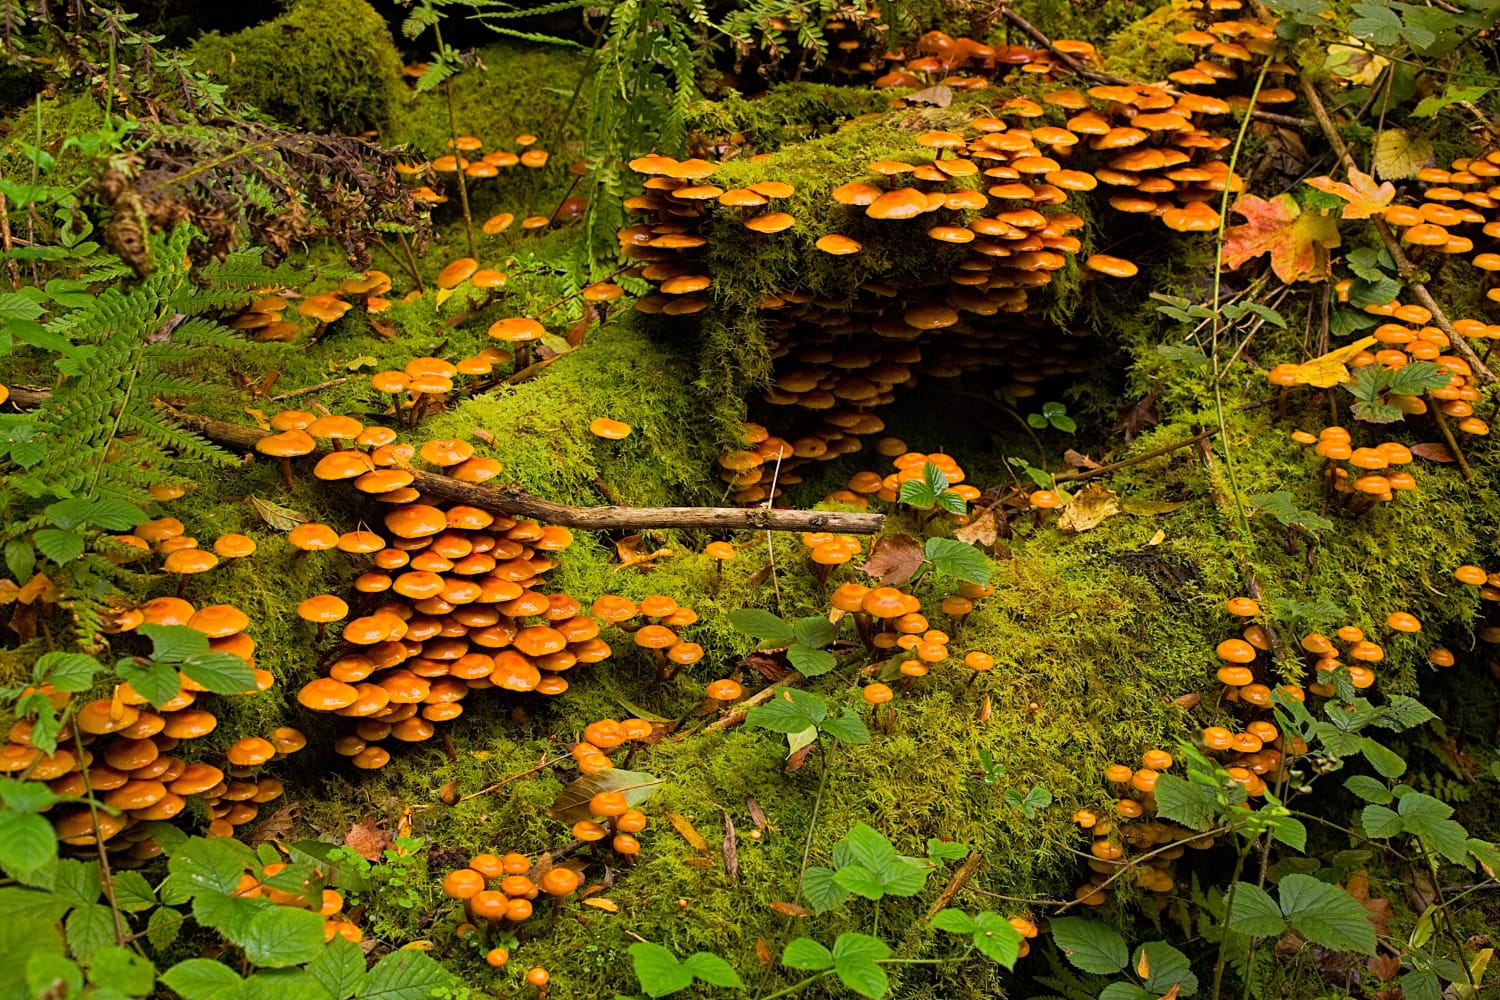 Mushrooms in North Of England